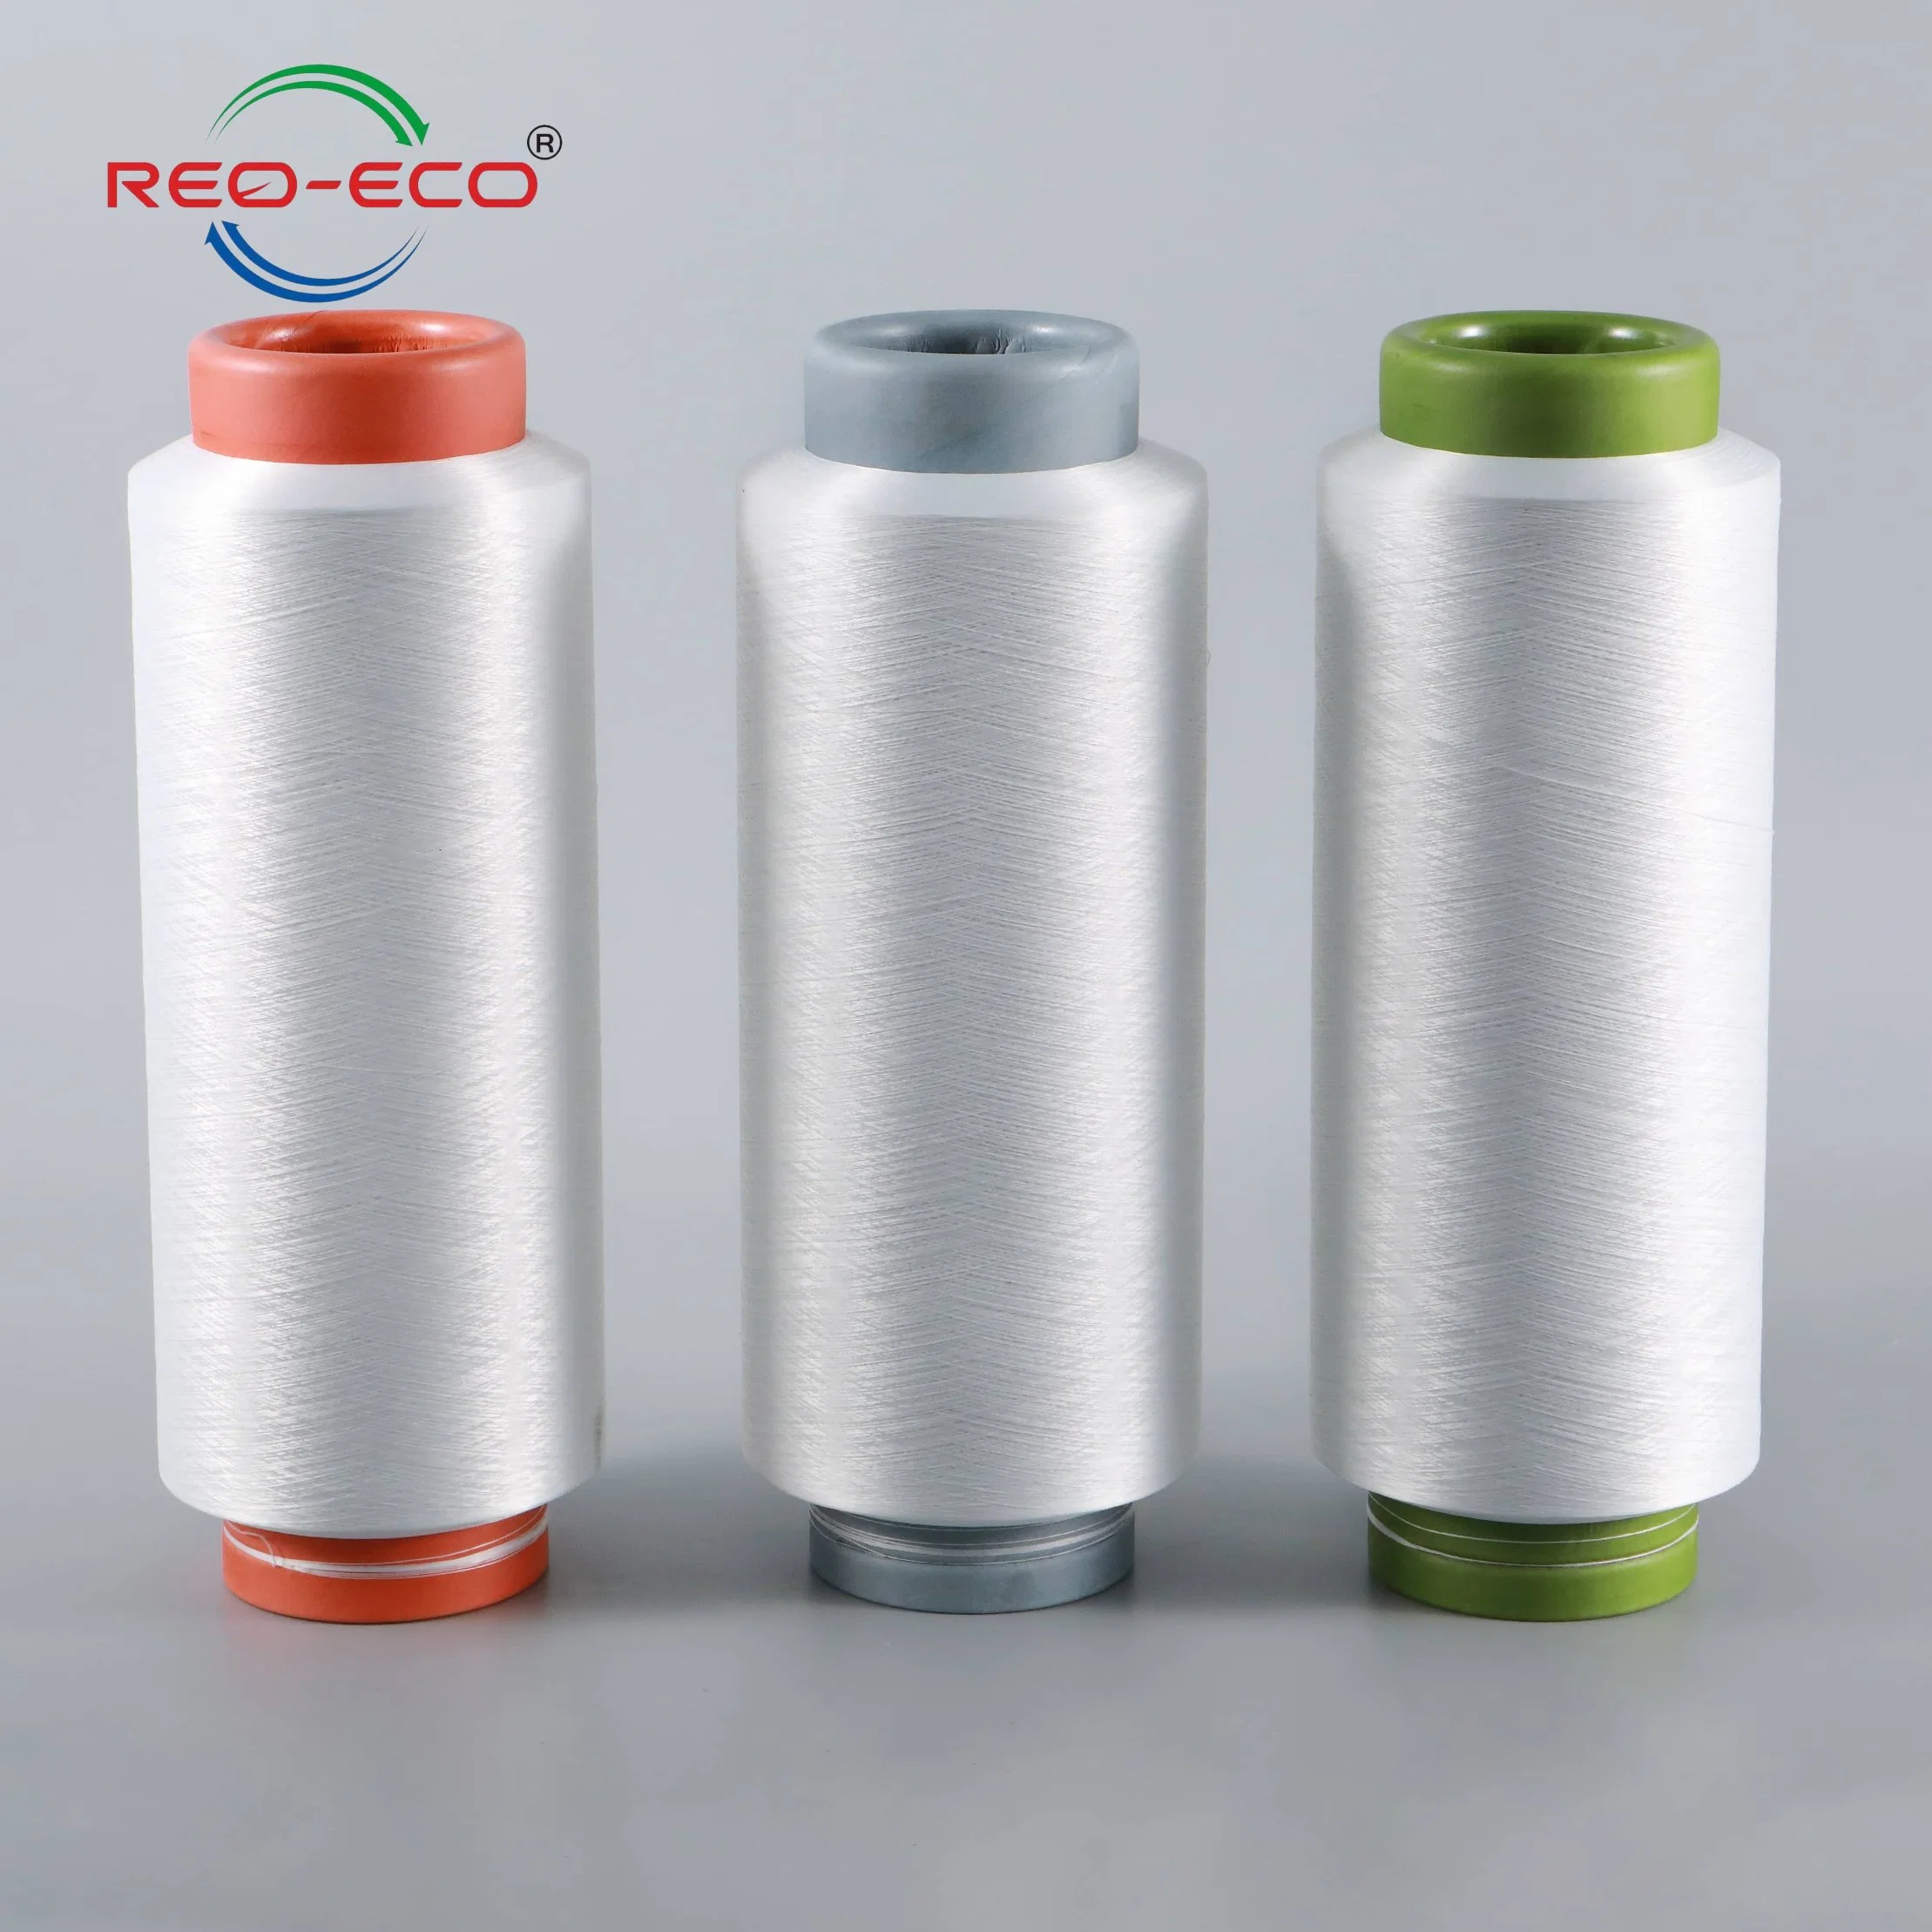 Reo-Eco 100% reciclado hilados de filamentos de poliéster